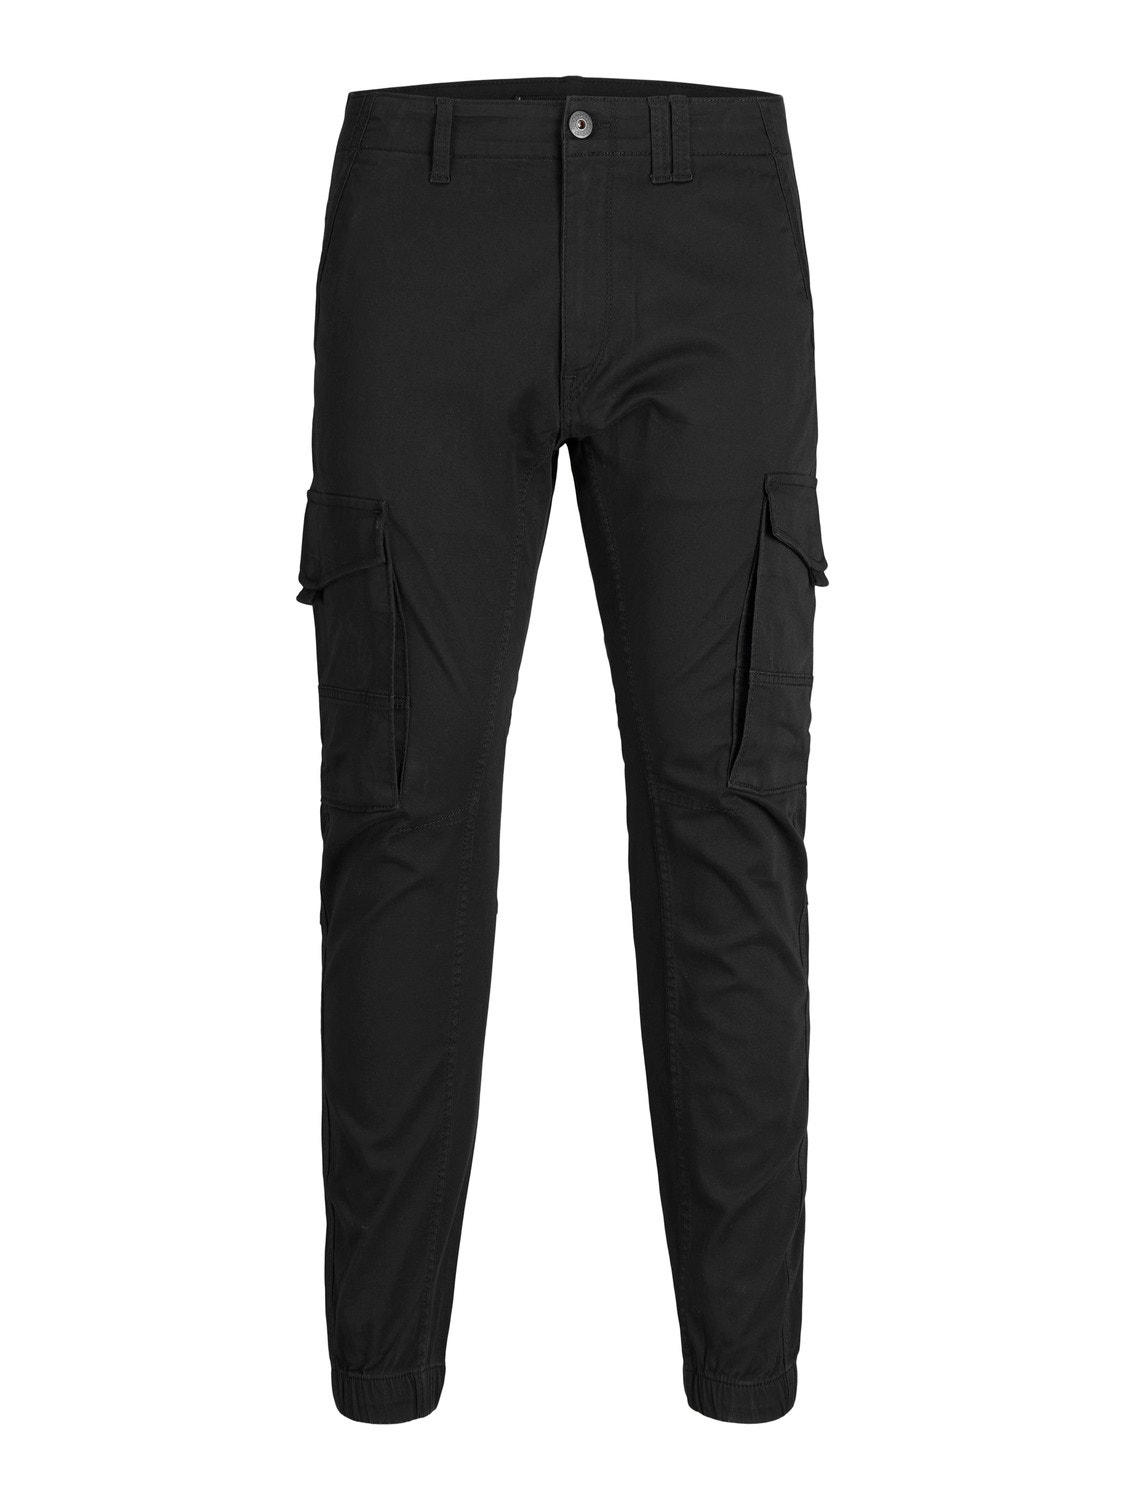 Pantalon cargo Tapered Fit Noir en coton Jack & Jones - Pantalon